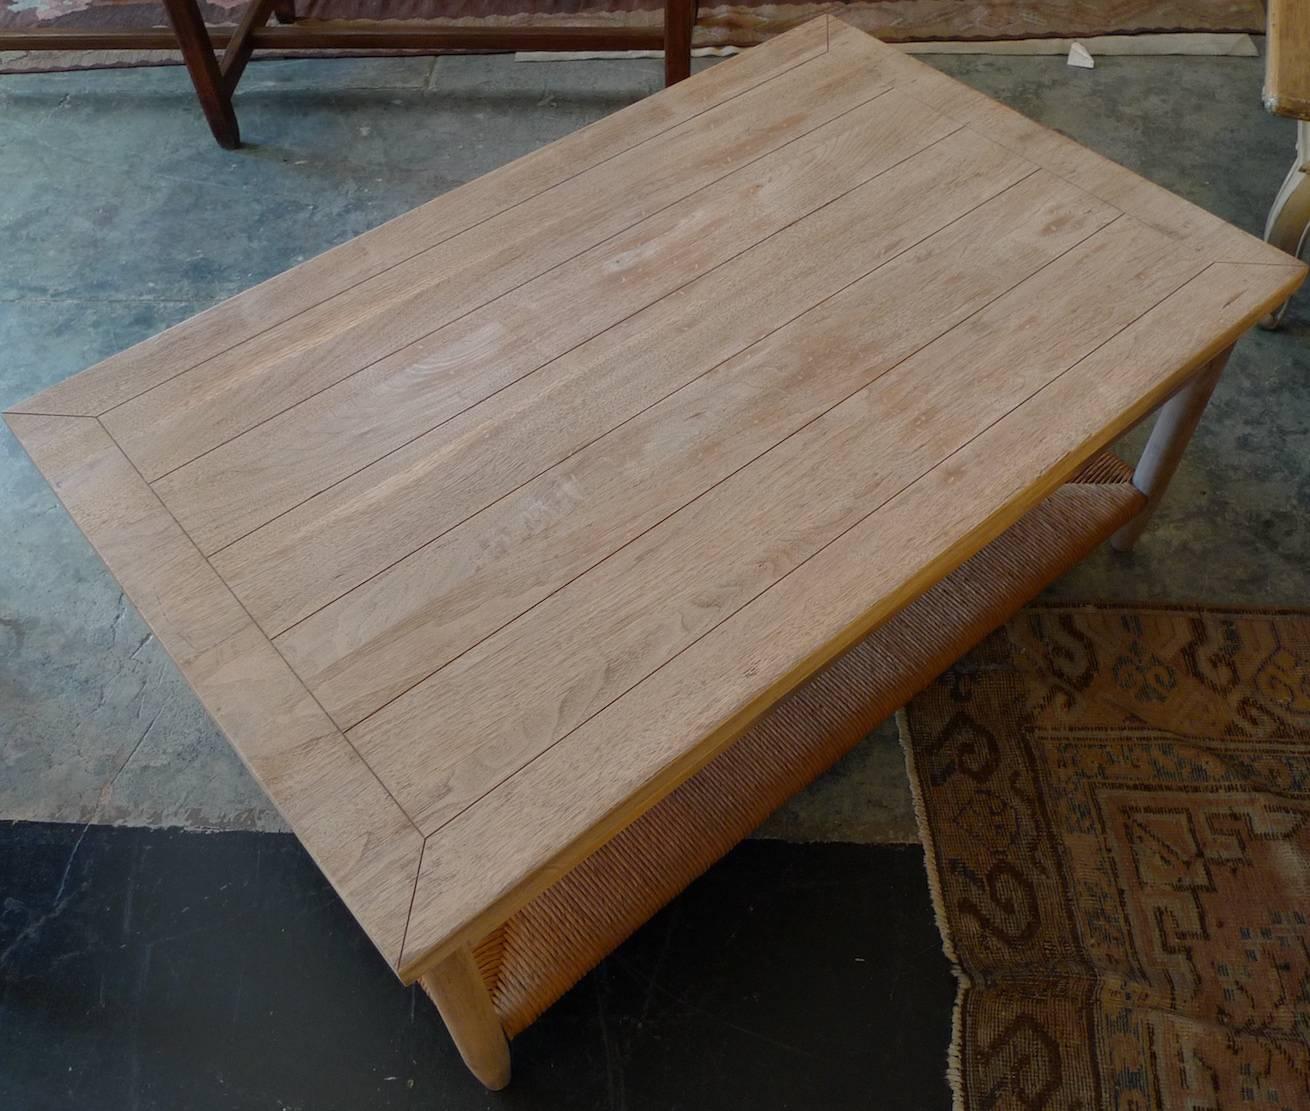 Newport 1980s style wood coffee table with rush shelf.